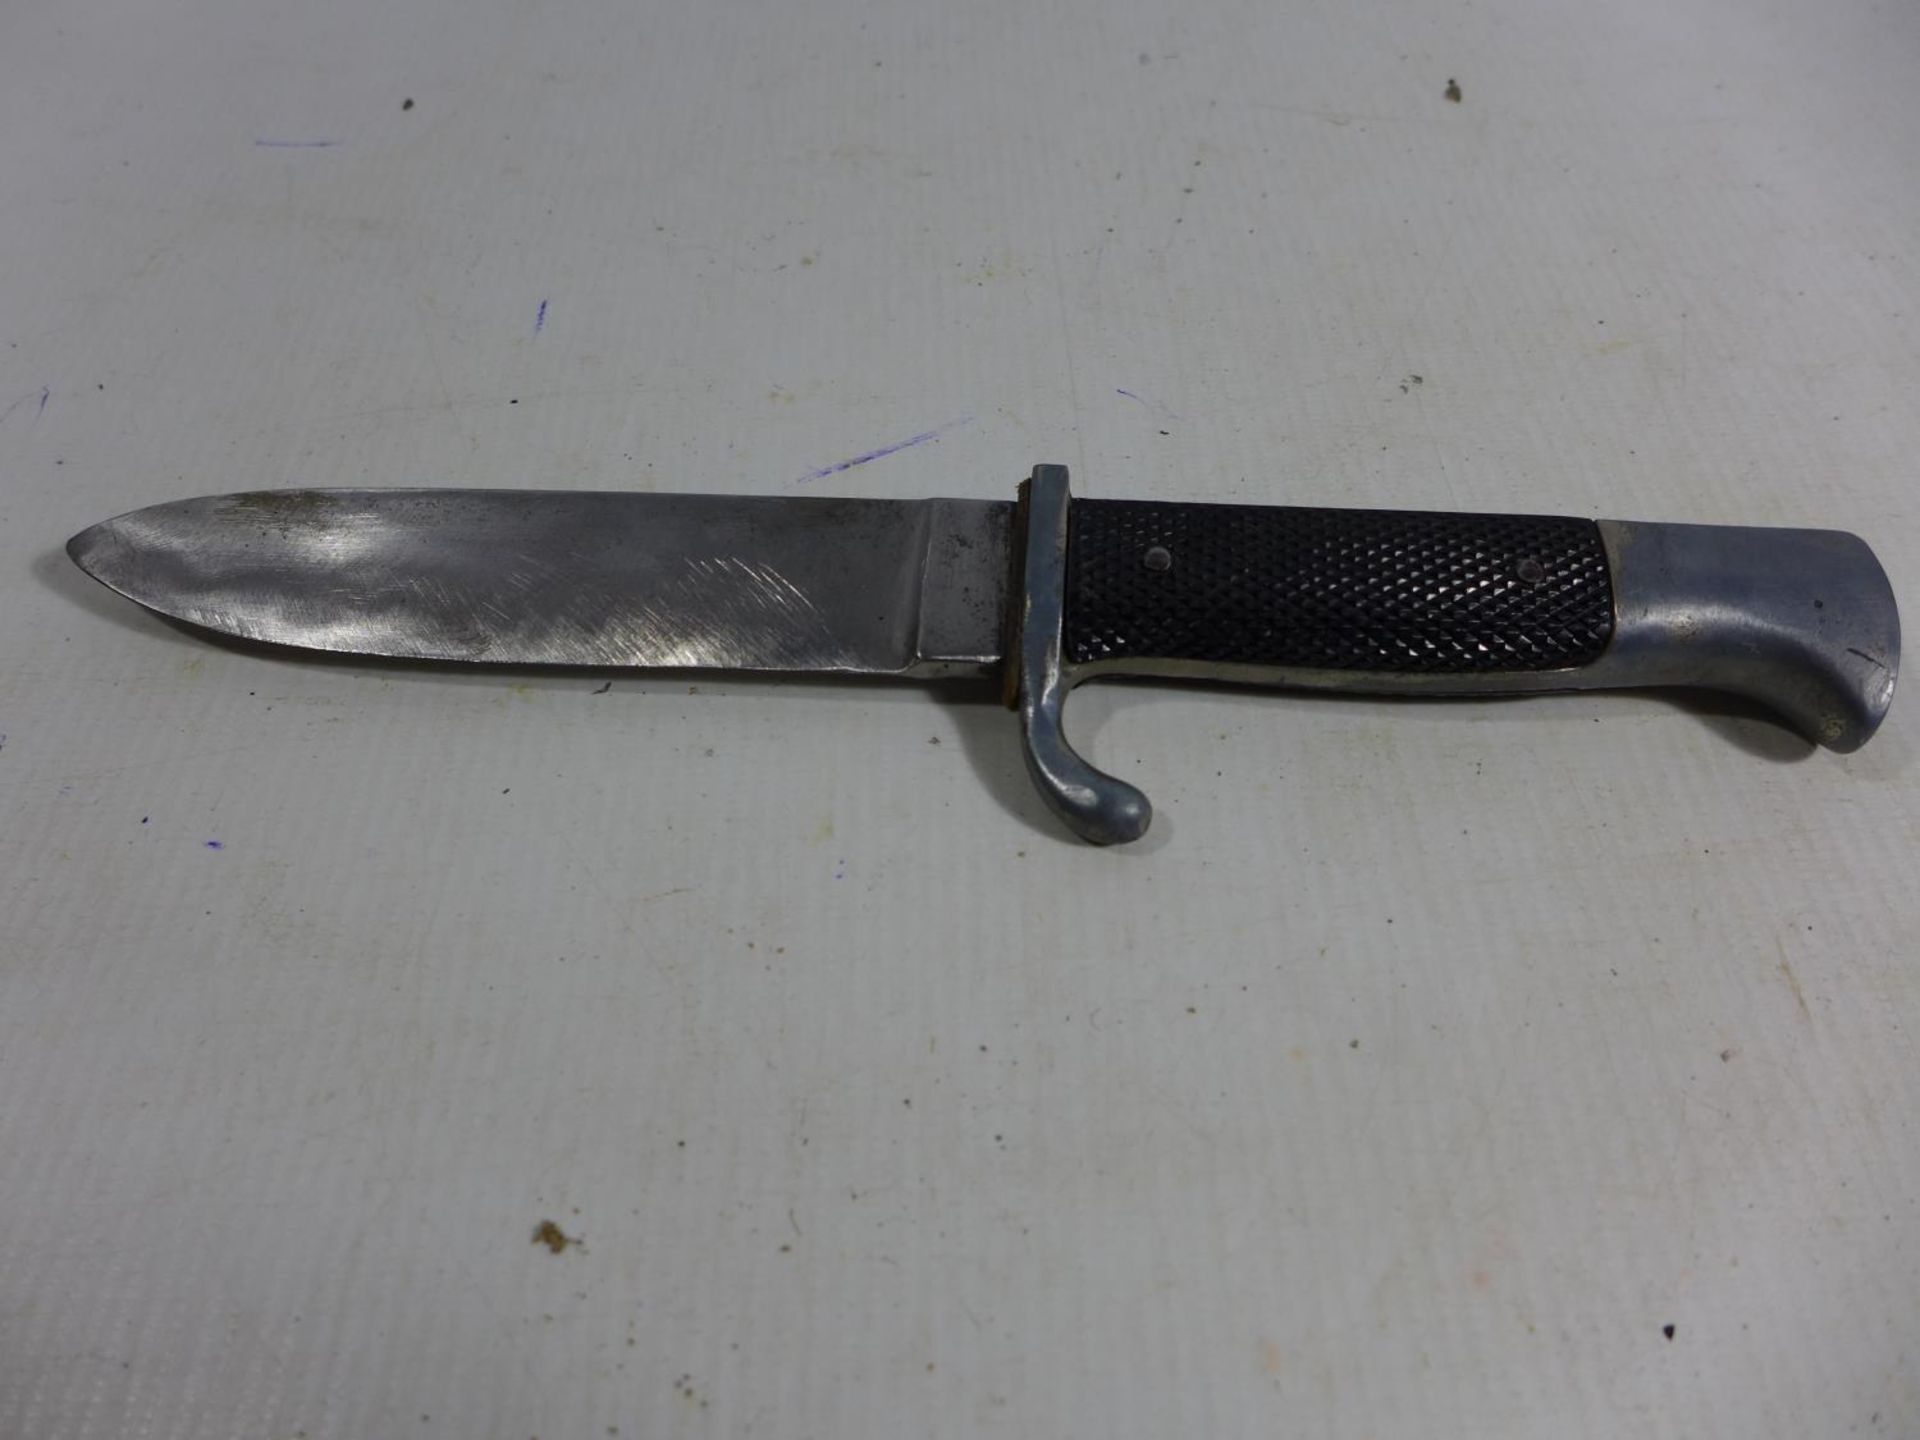 A NAZI GERMANY HITLER YOUTH KNIFE, 13CM BLADE, LENGTH 24CM, LACKING EMBLEM - Image 3 of 5